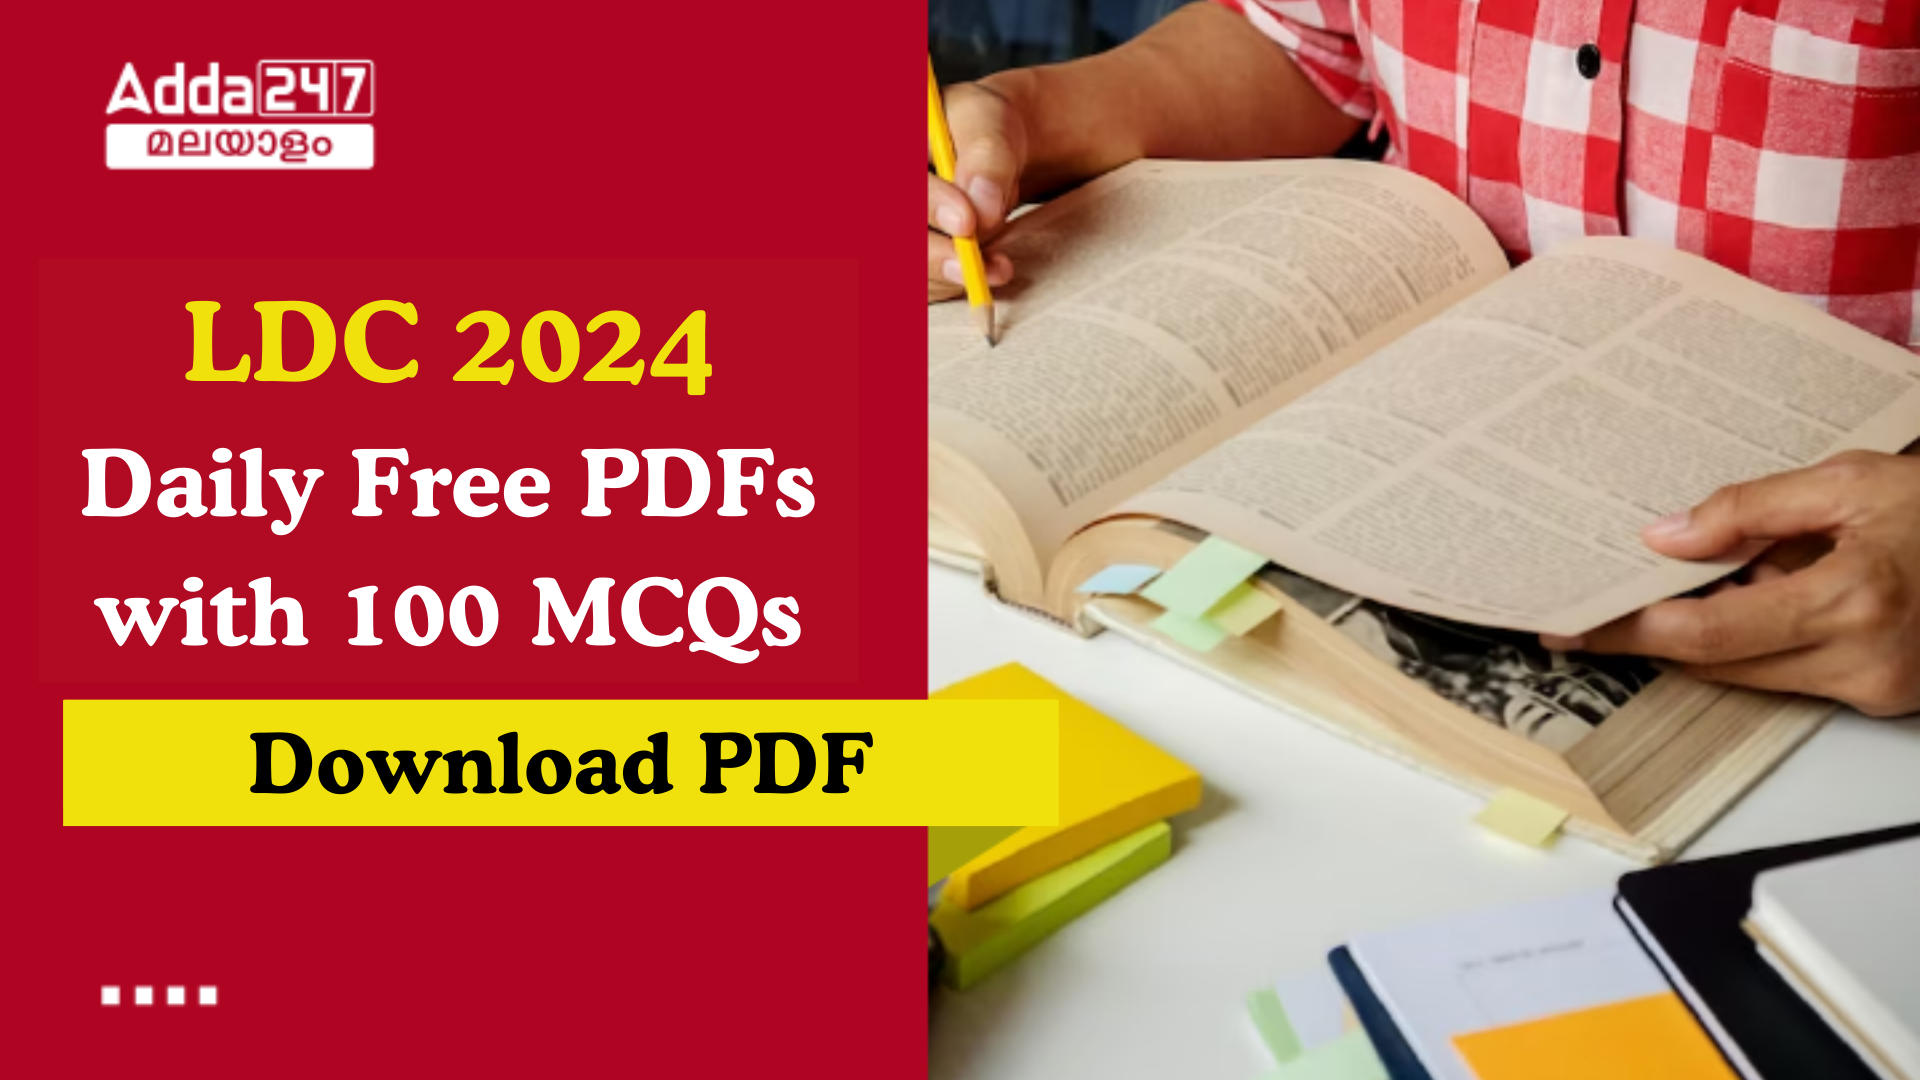 LDC 2024 സ്റ്റഡി മെറ്റീരിയൽ 100 MCQ-കളുള്ള ഡെയിലി സൗജന്യ PDF, ഡൗൺലോഡ് ലിങ്ക്